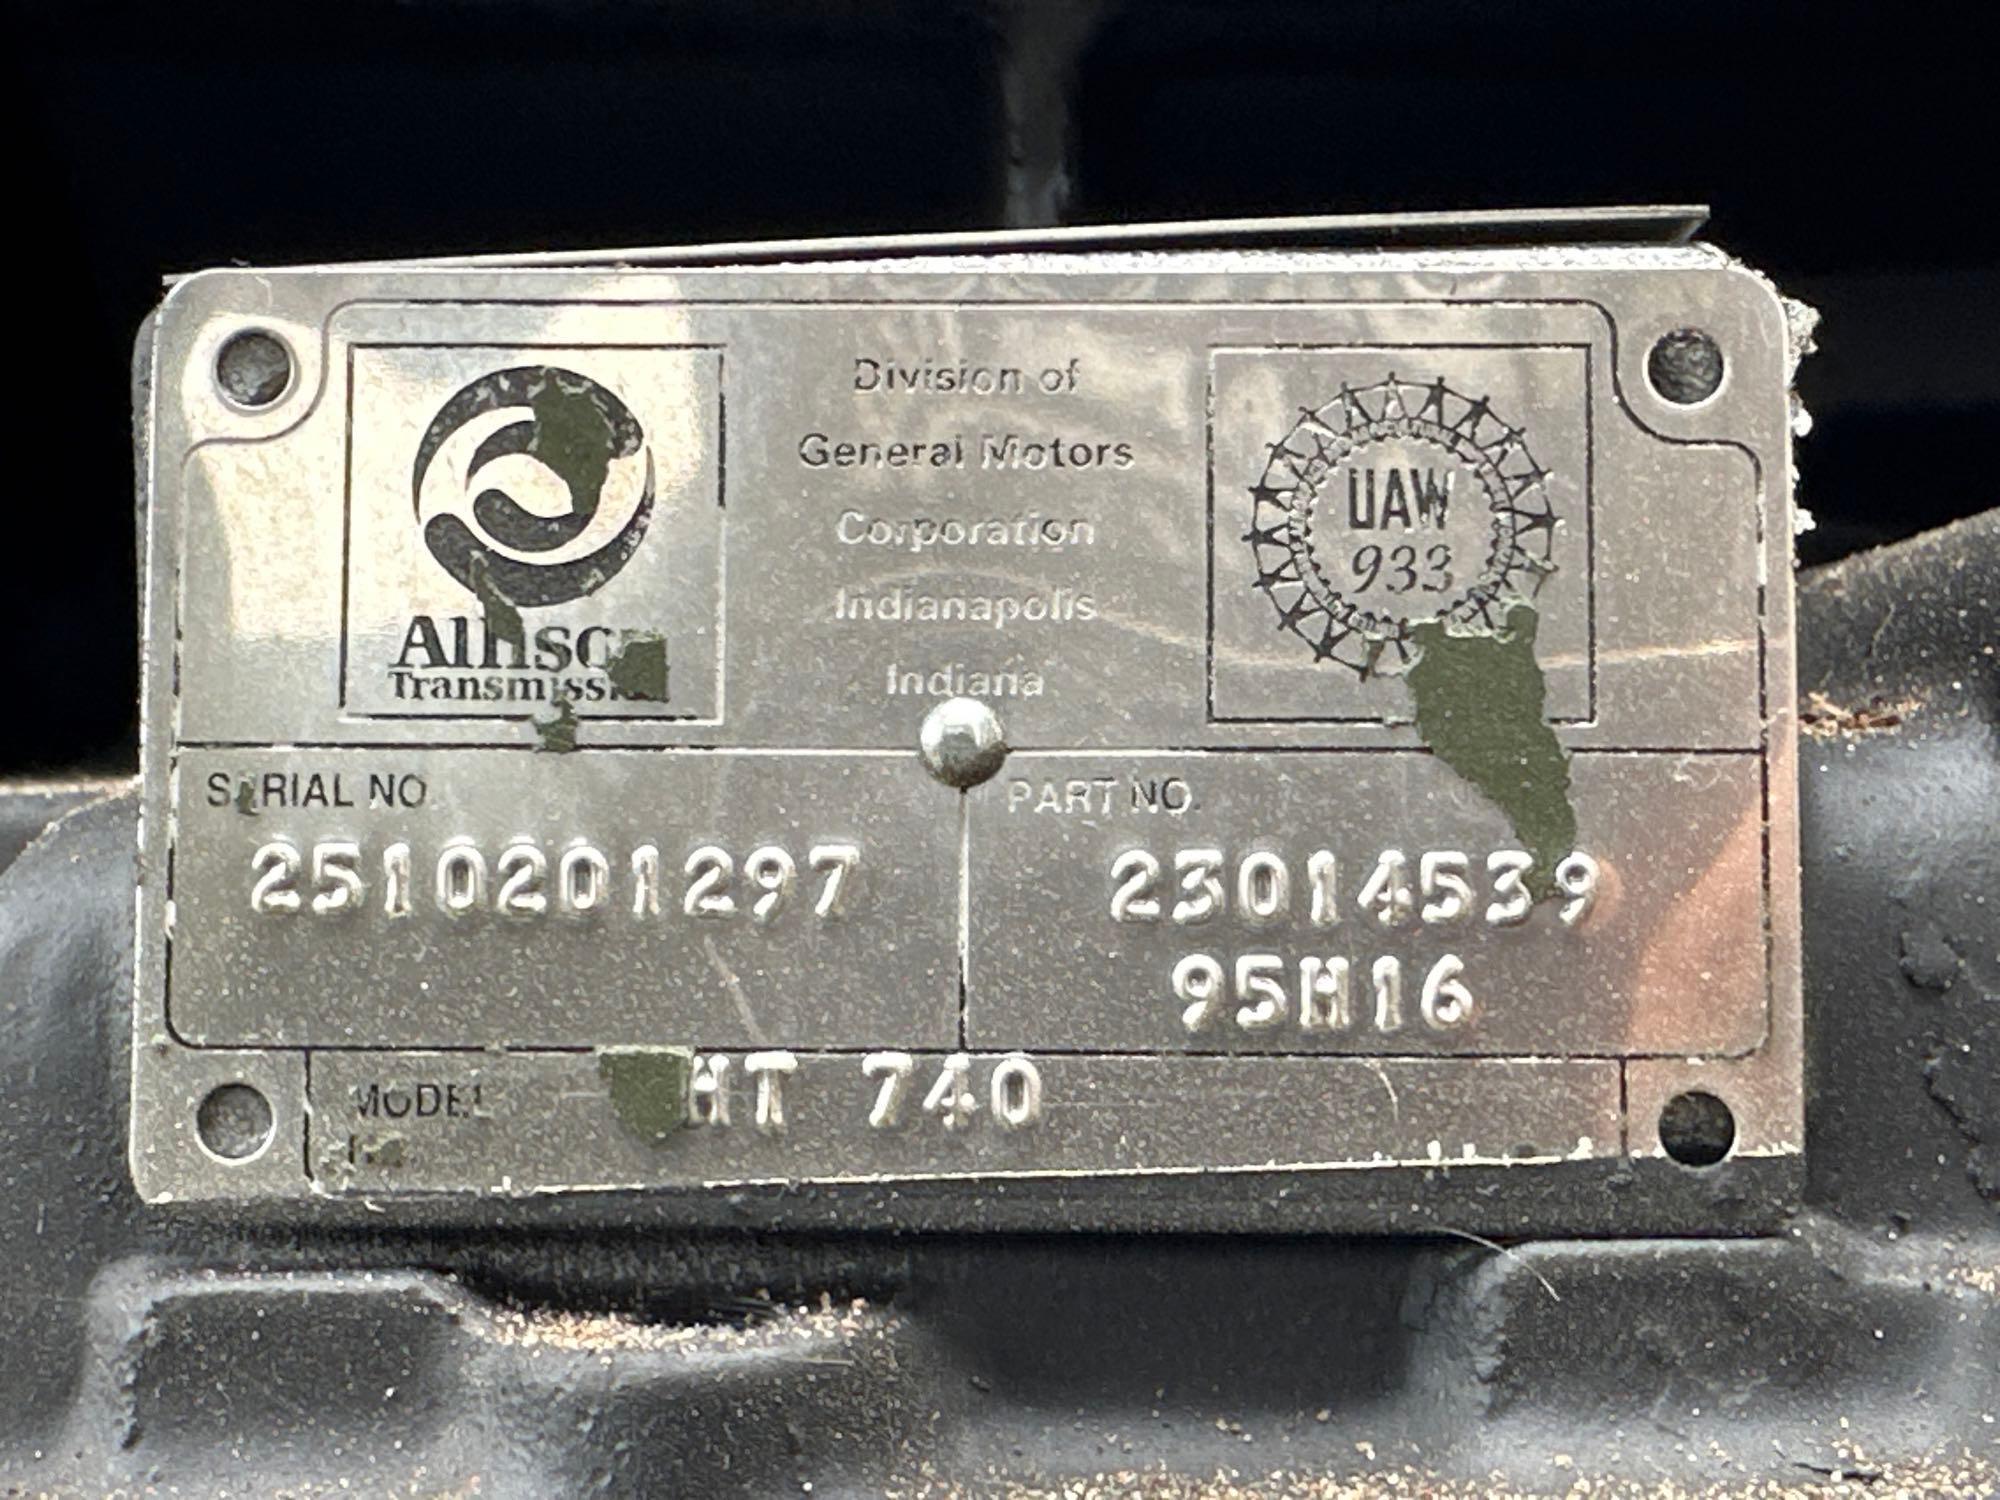 NEW/UNUSED HT-740 Allison Transmission w/ Torque Converter